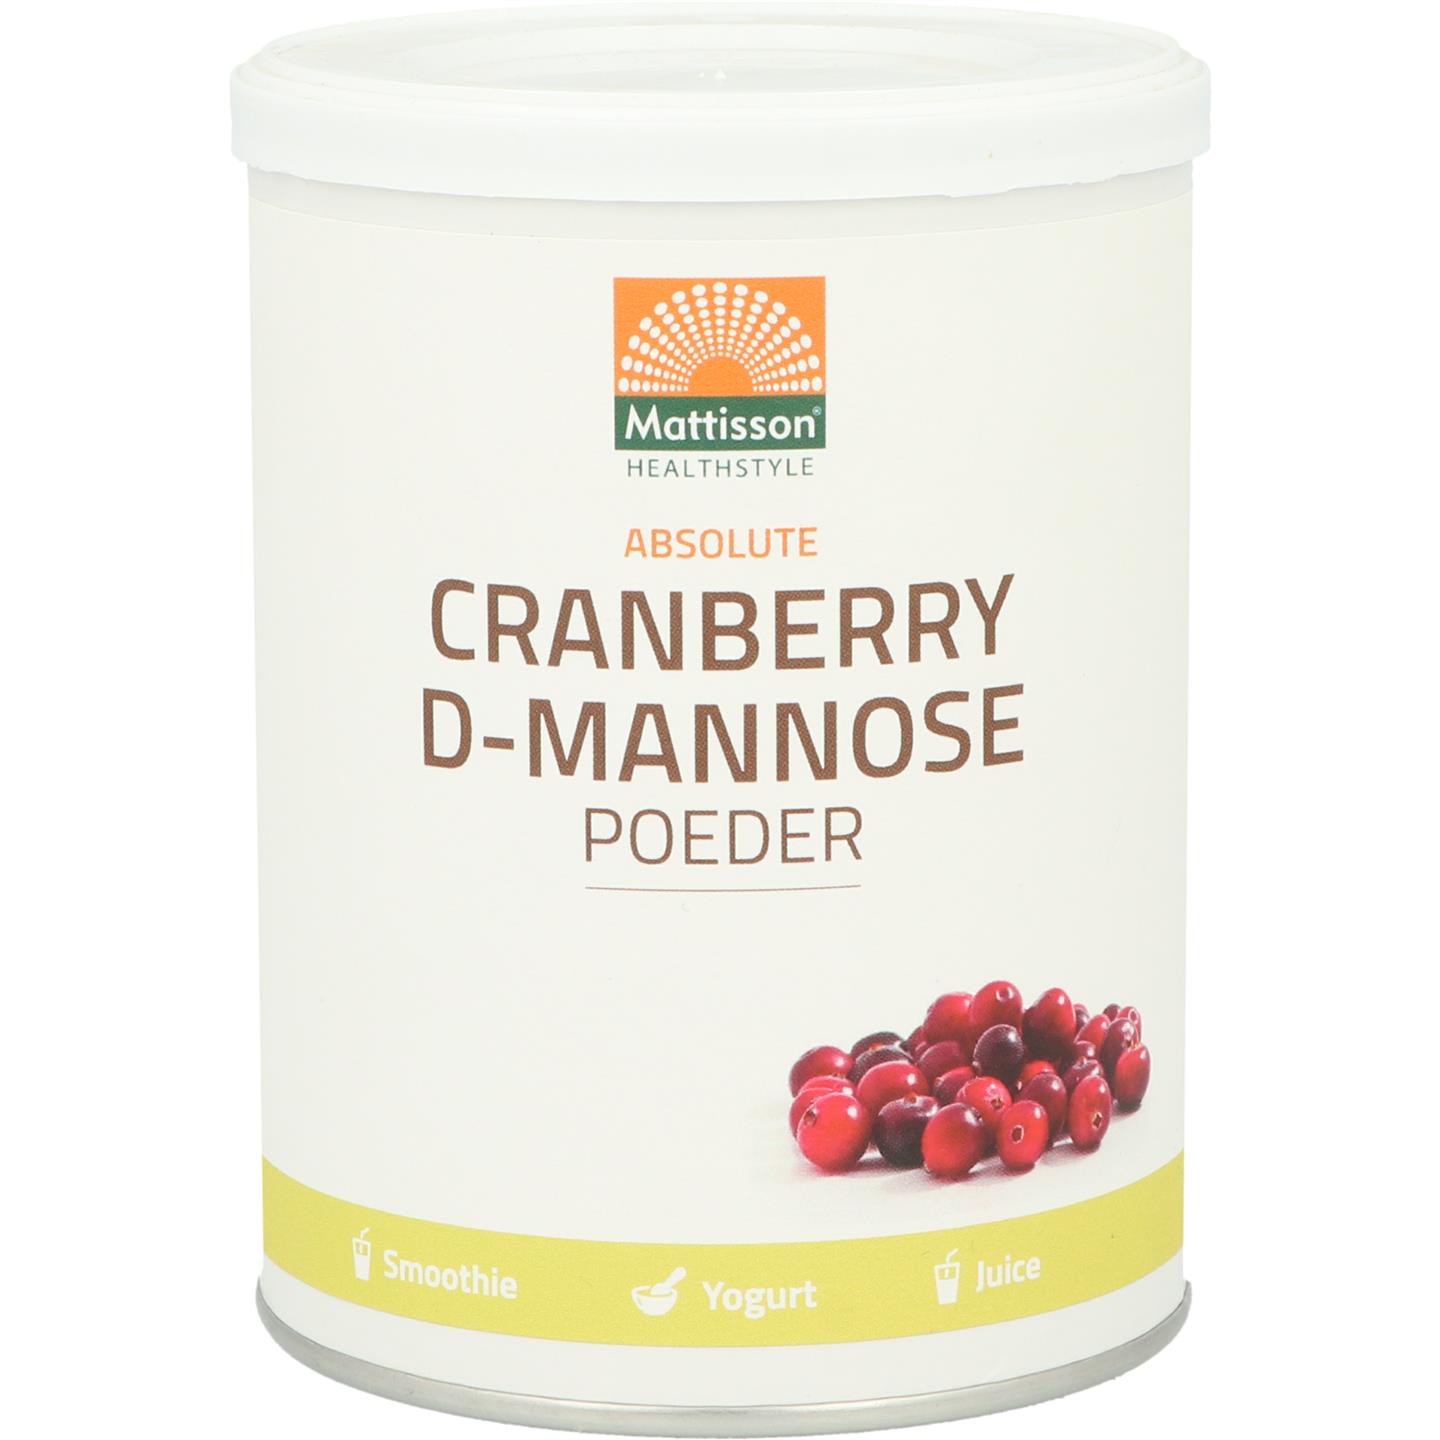 Cranberry D-Mannose poeder